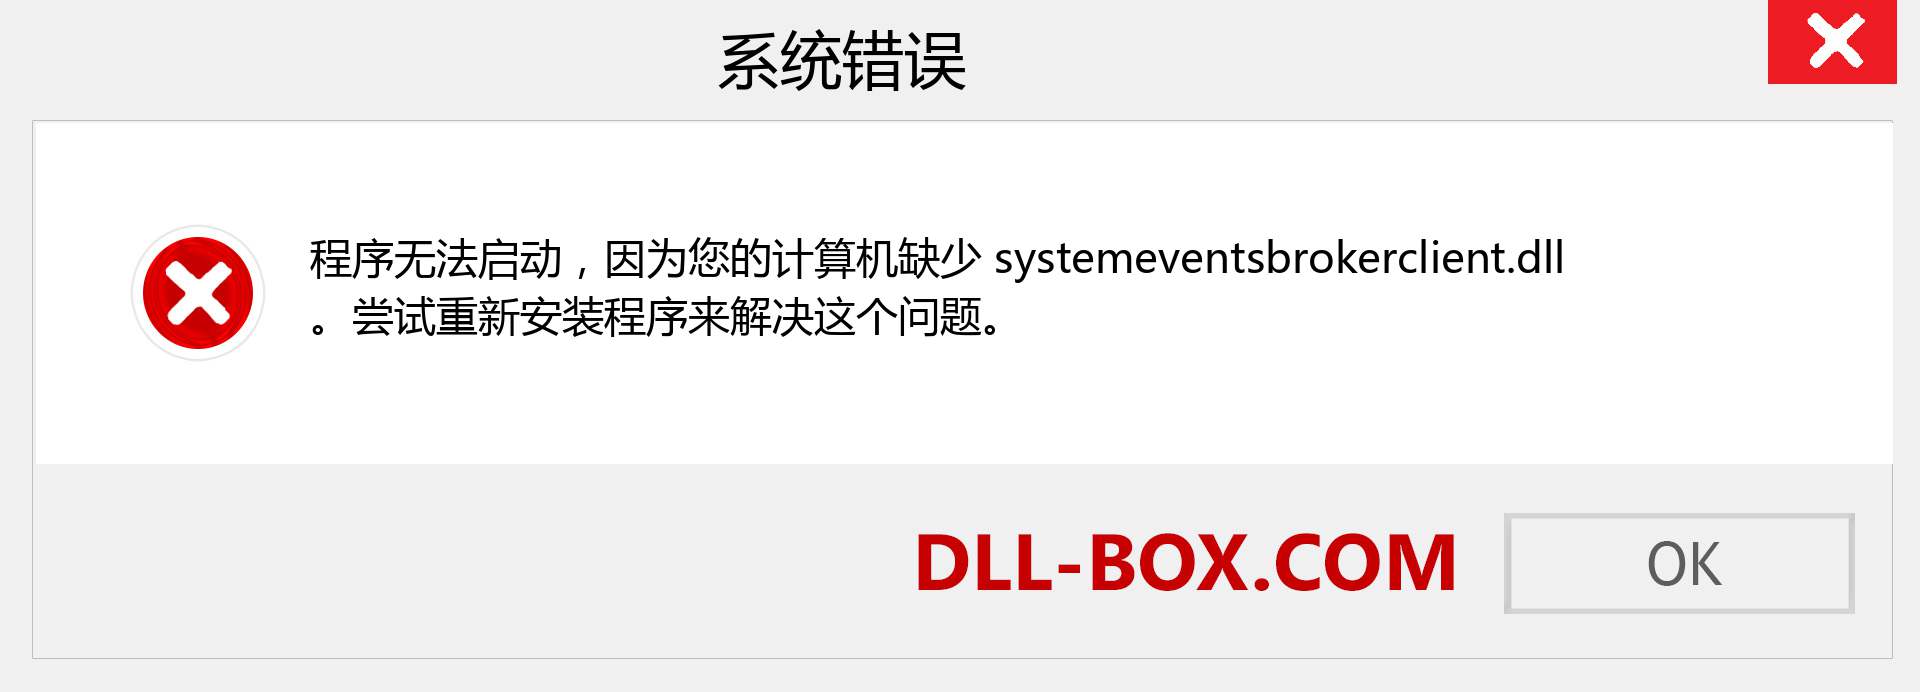 systemeventsbrokerclient.dll 文件丢失？。 适用于 Windows 7、8、10 的下载 - 修复 Windows、照片、图像上的 systemeventsbrokerclient dll 丢失错误